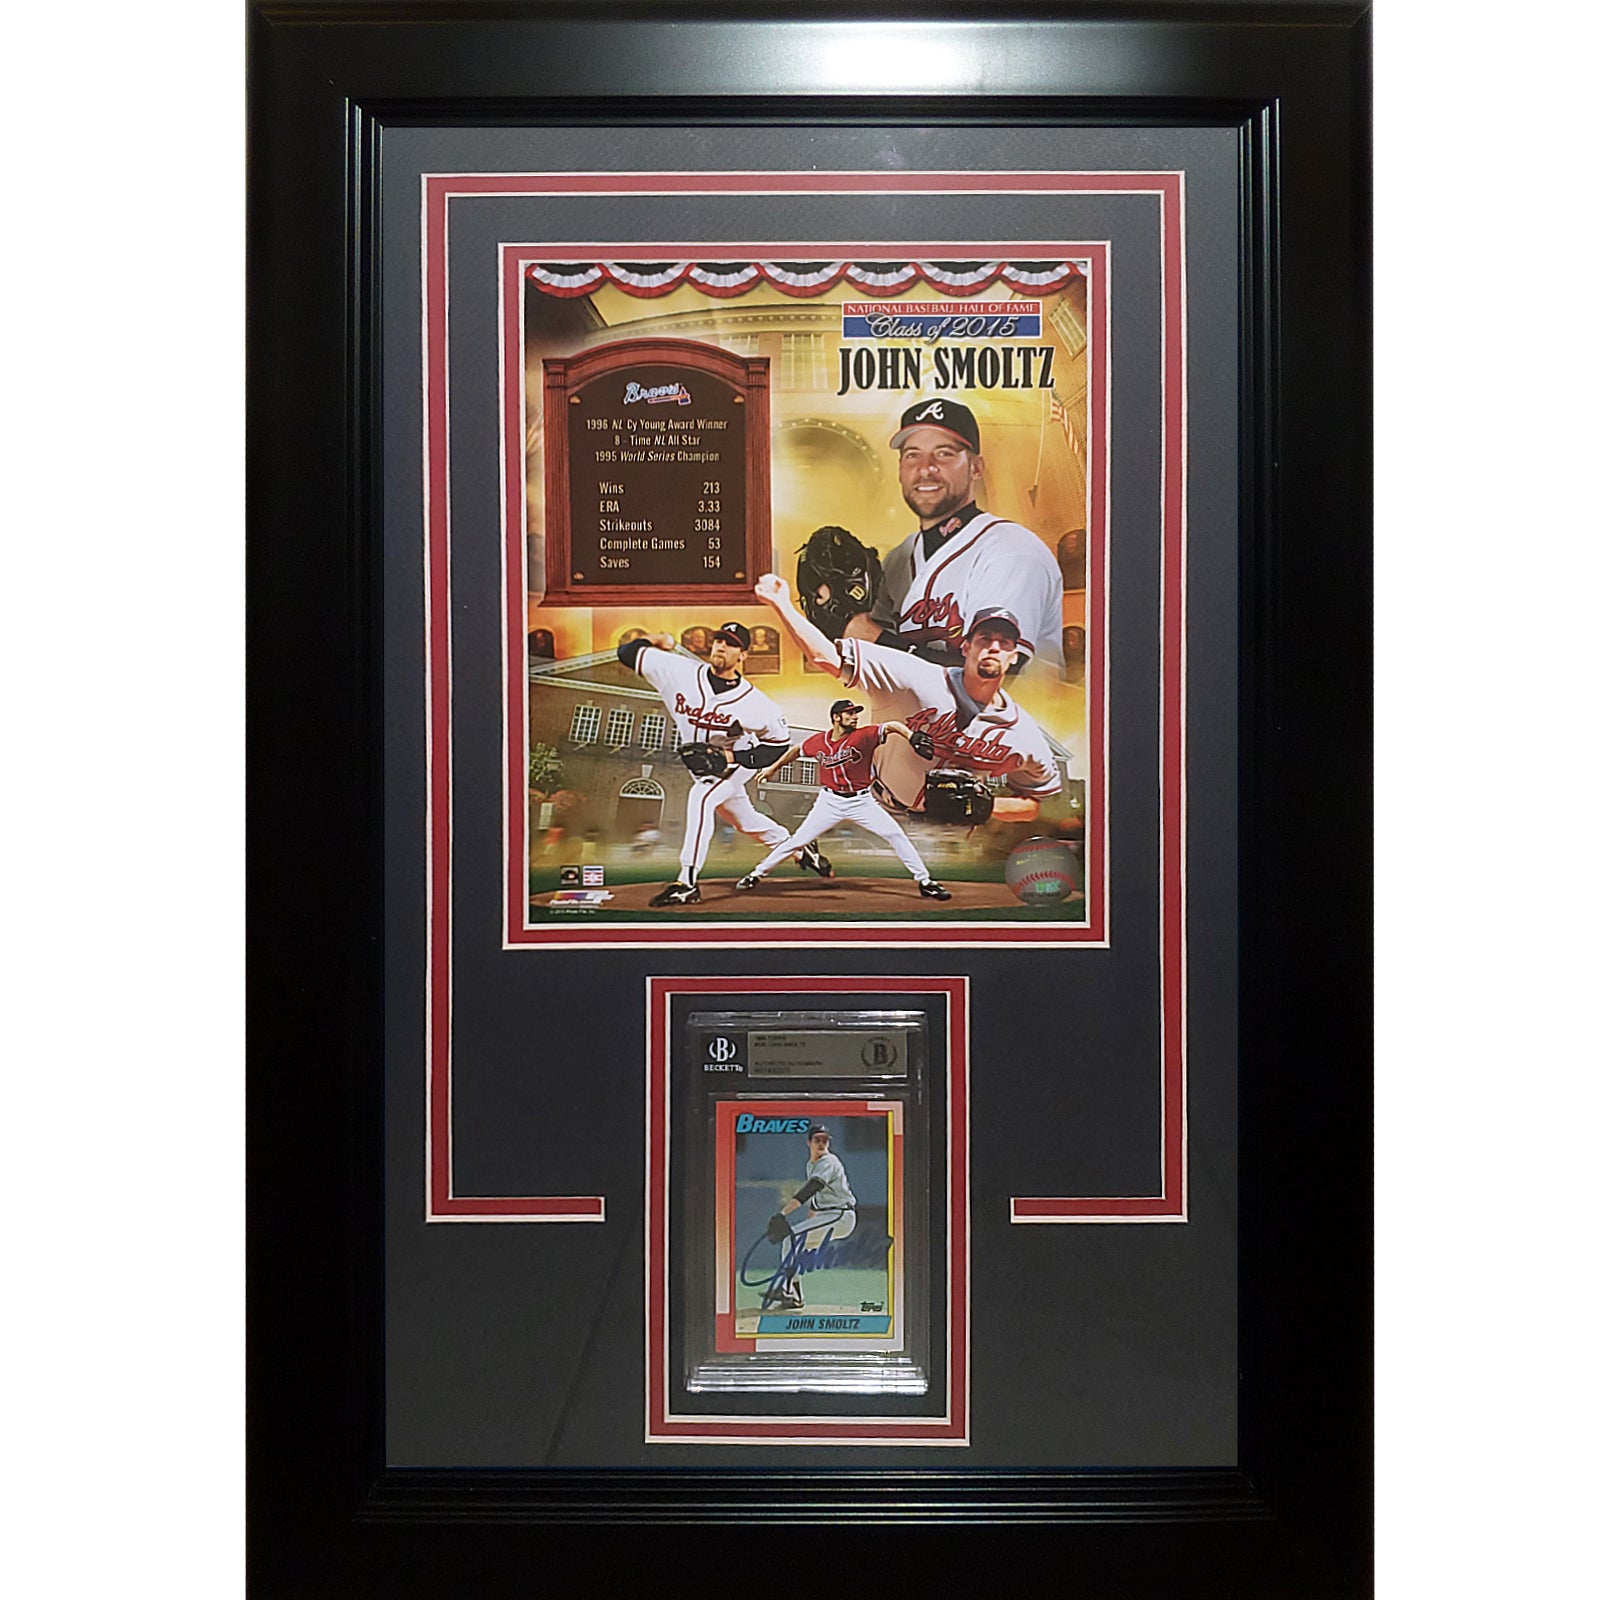 John Smoltz Autographed Baseball Card Deluxe Framed with Atlanta